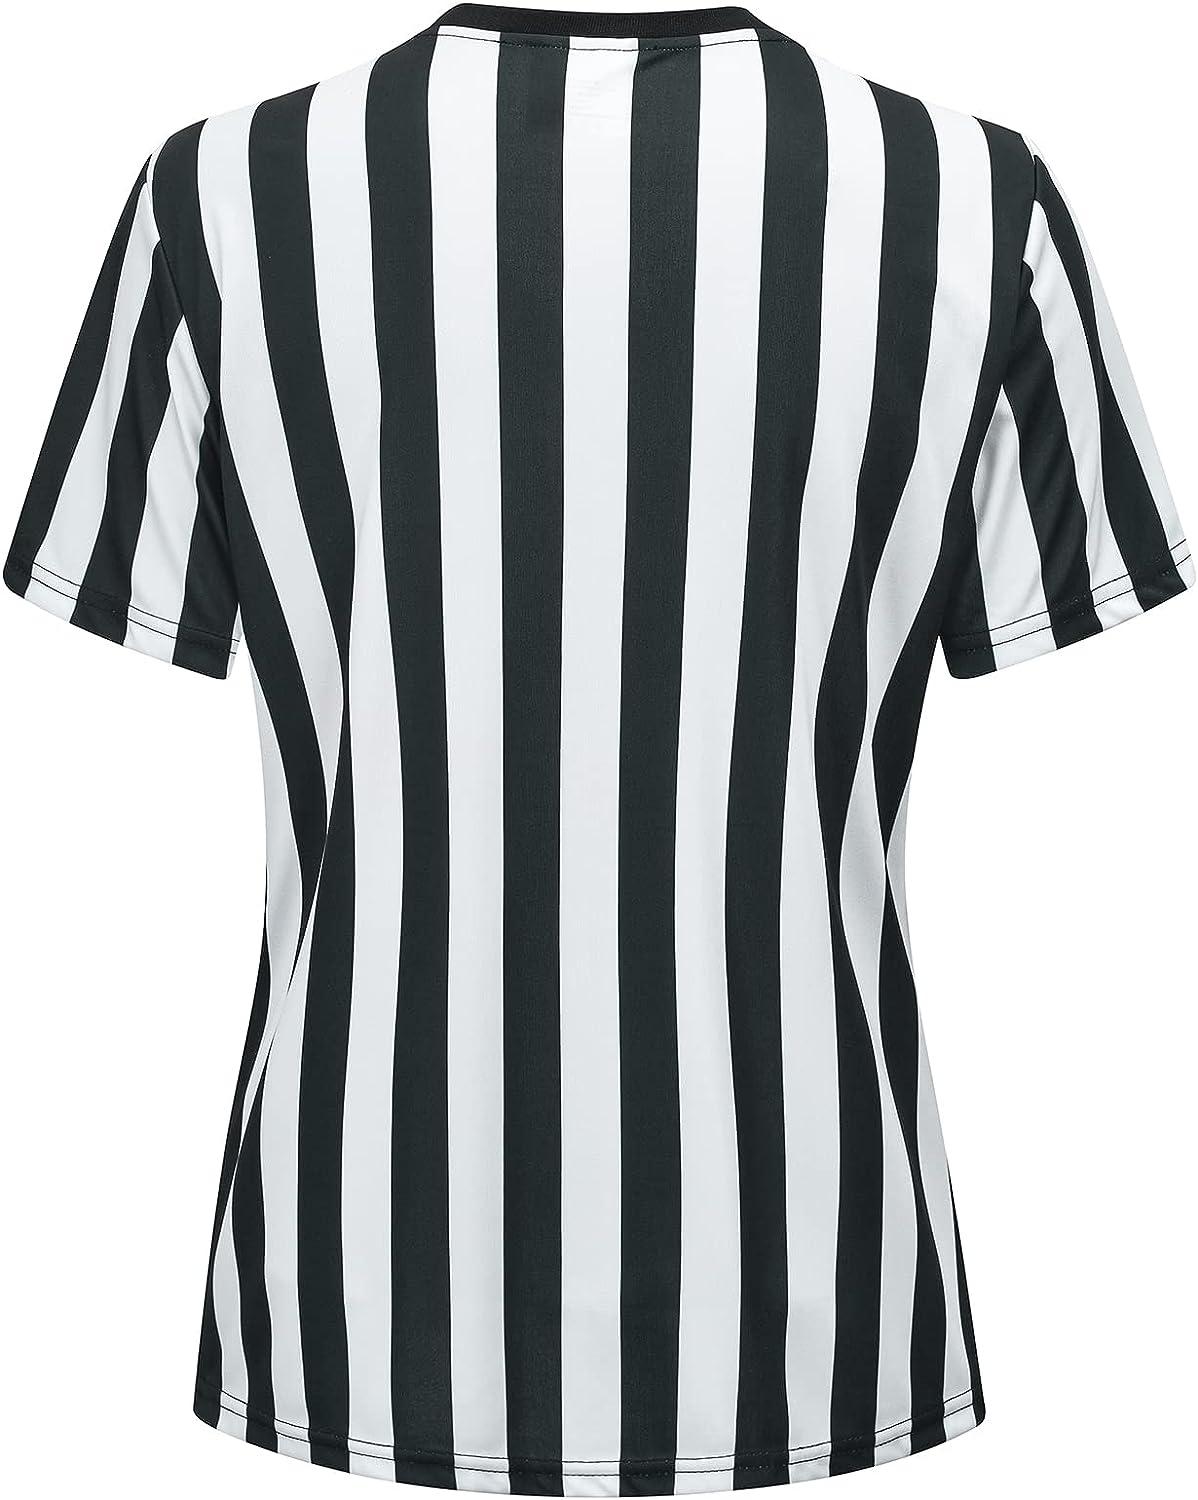 Thapower Women's Official Referee Shirt Black & White Stripe Ref Umpire Jersey Short Sleeve for Basketball Football Hockey